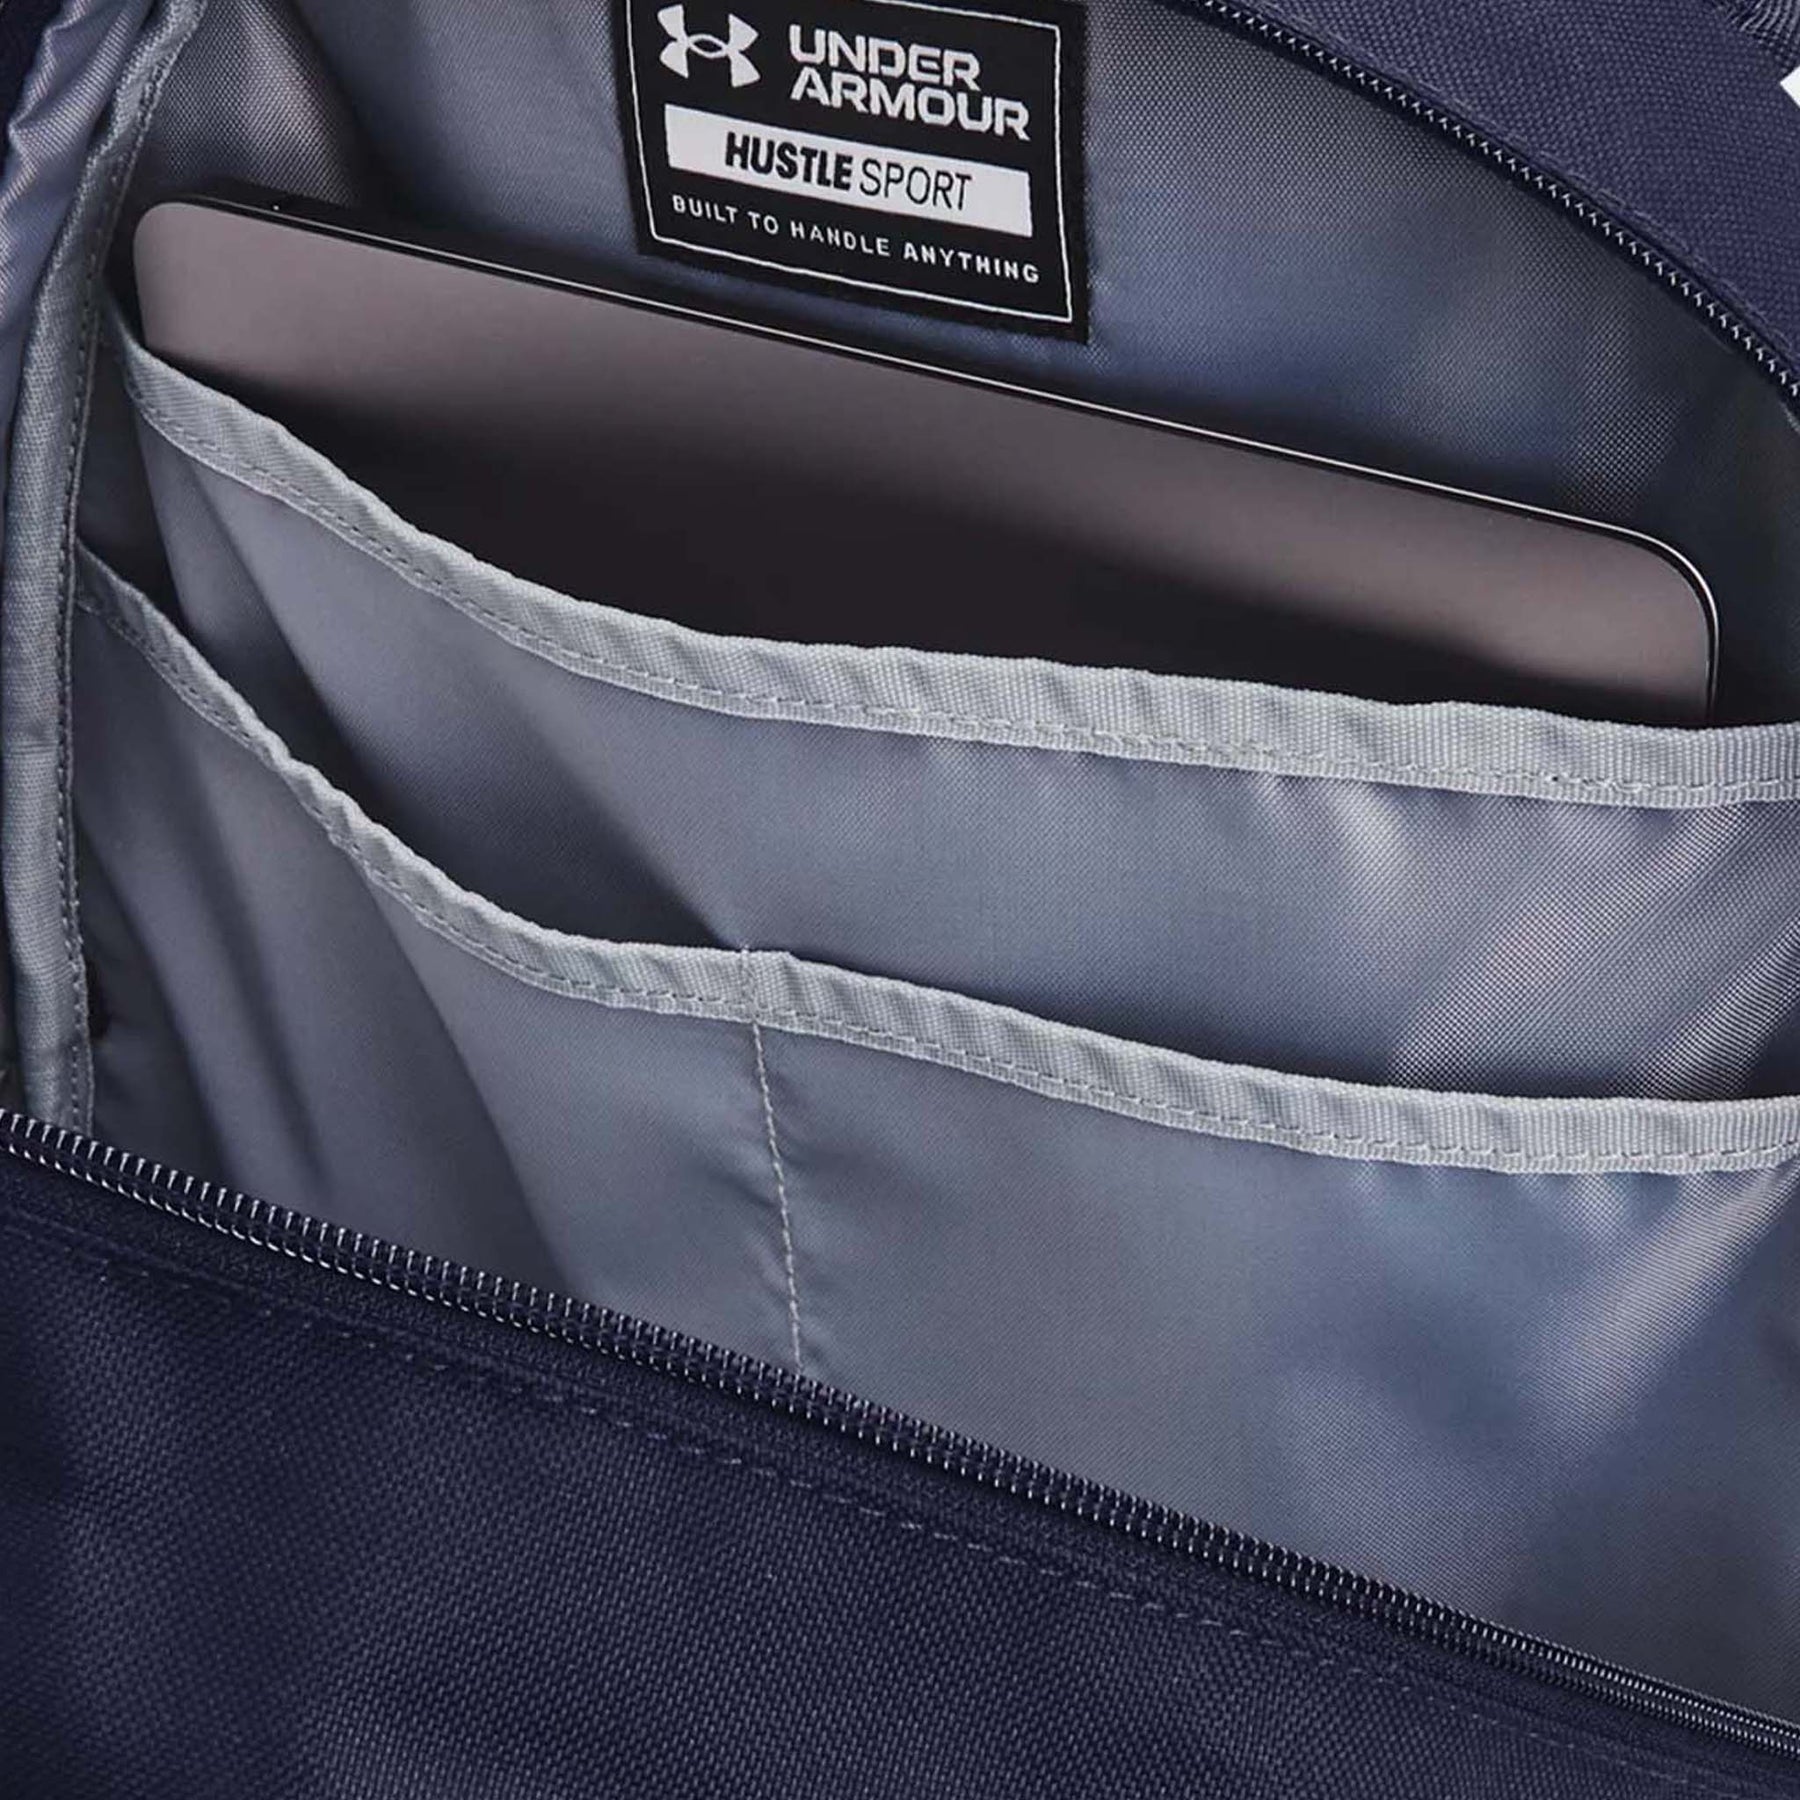 Under Armour Hustle Sport Backpack: Navy